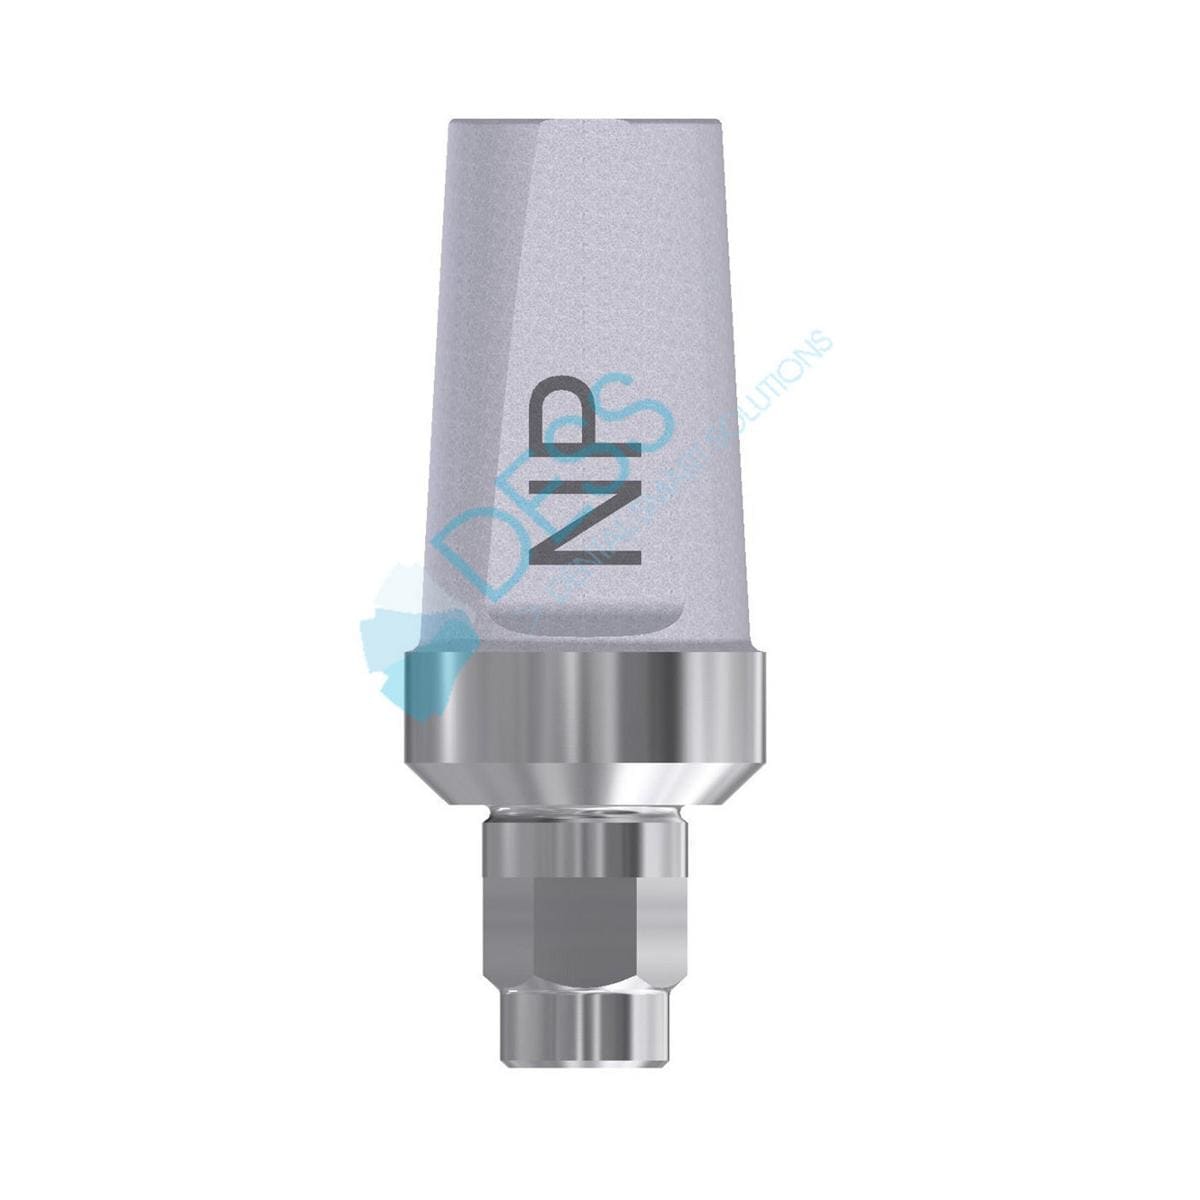 Titanabutment - kompatibel mit Dentsply Friadent® Xive® - NP Ø 3,4 mm, 0° gewinkelt